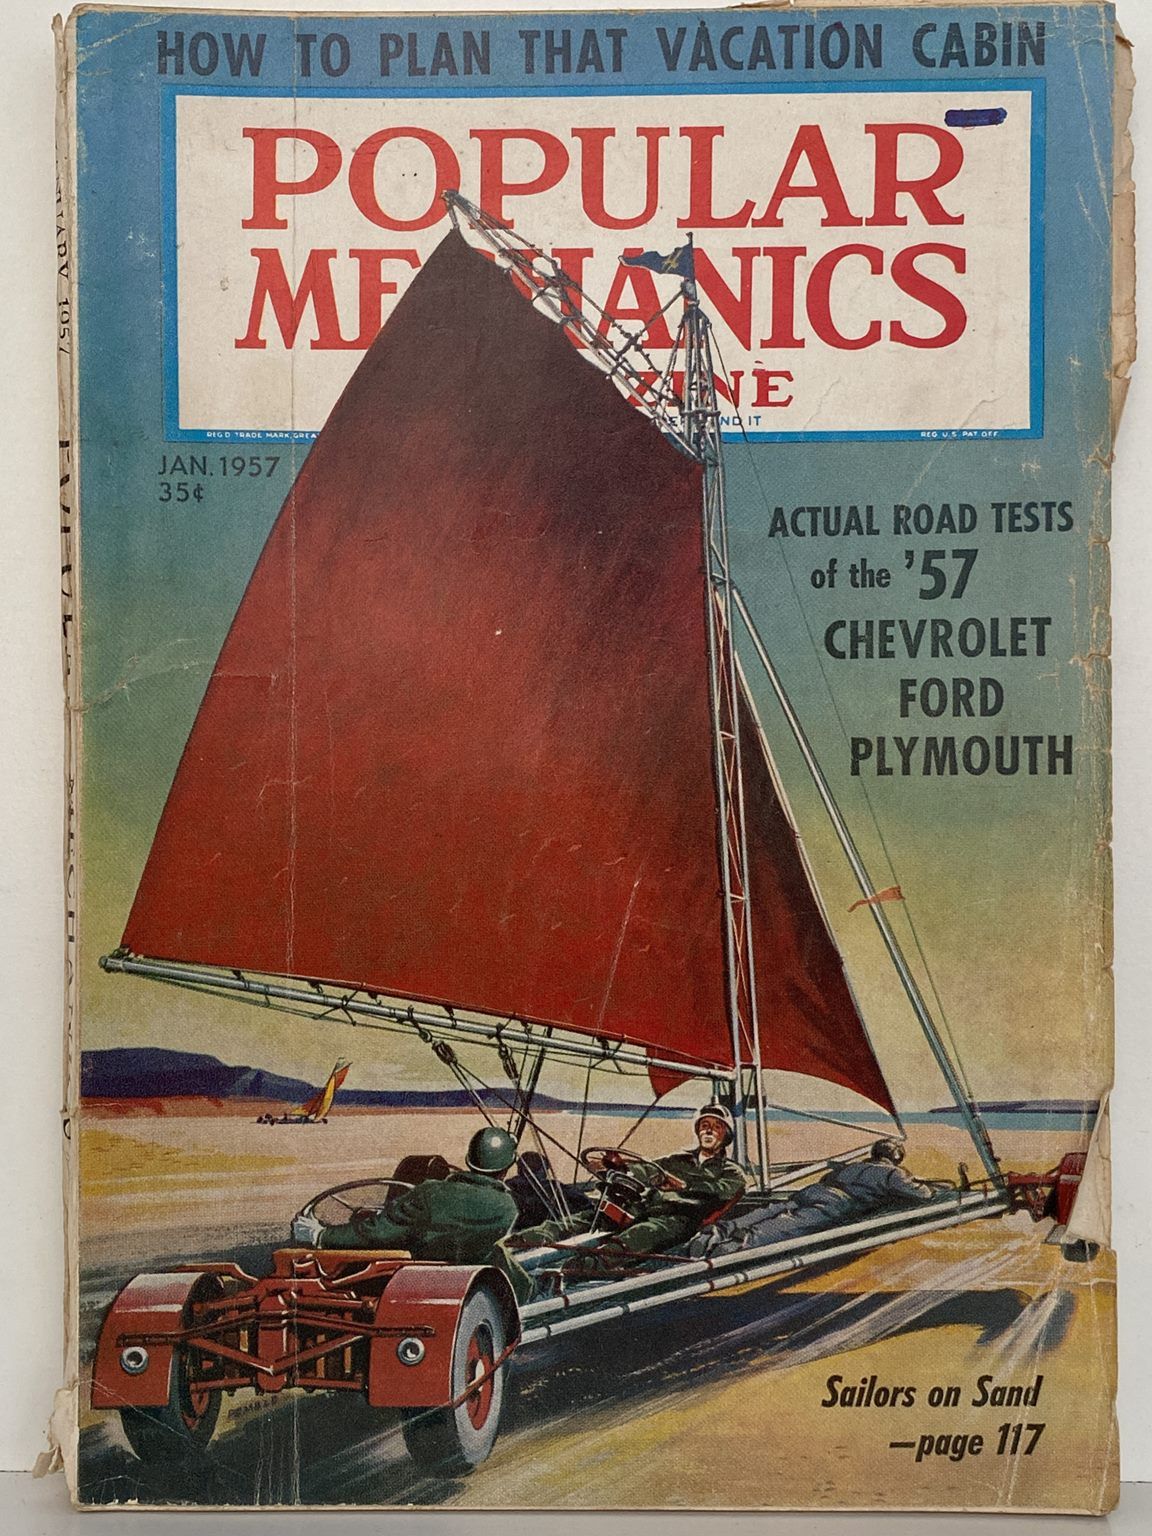 VINTAGE MAGAZINE: Popular Mechanics - Vol. 107, No. 1 - January 1957